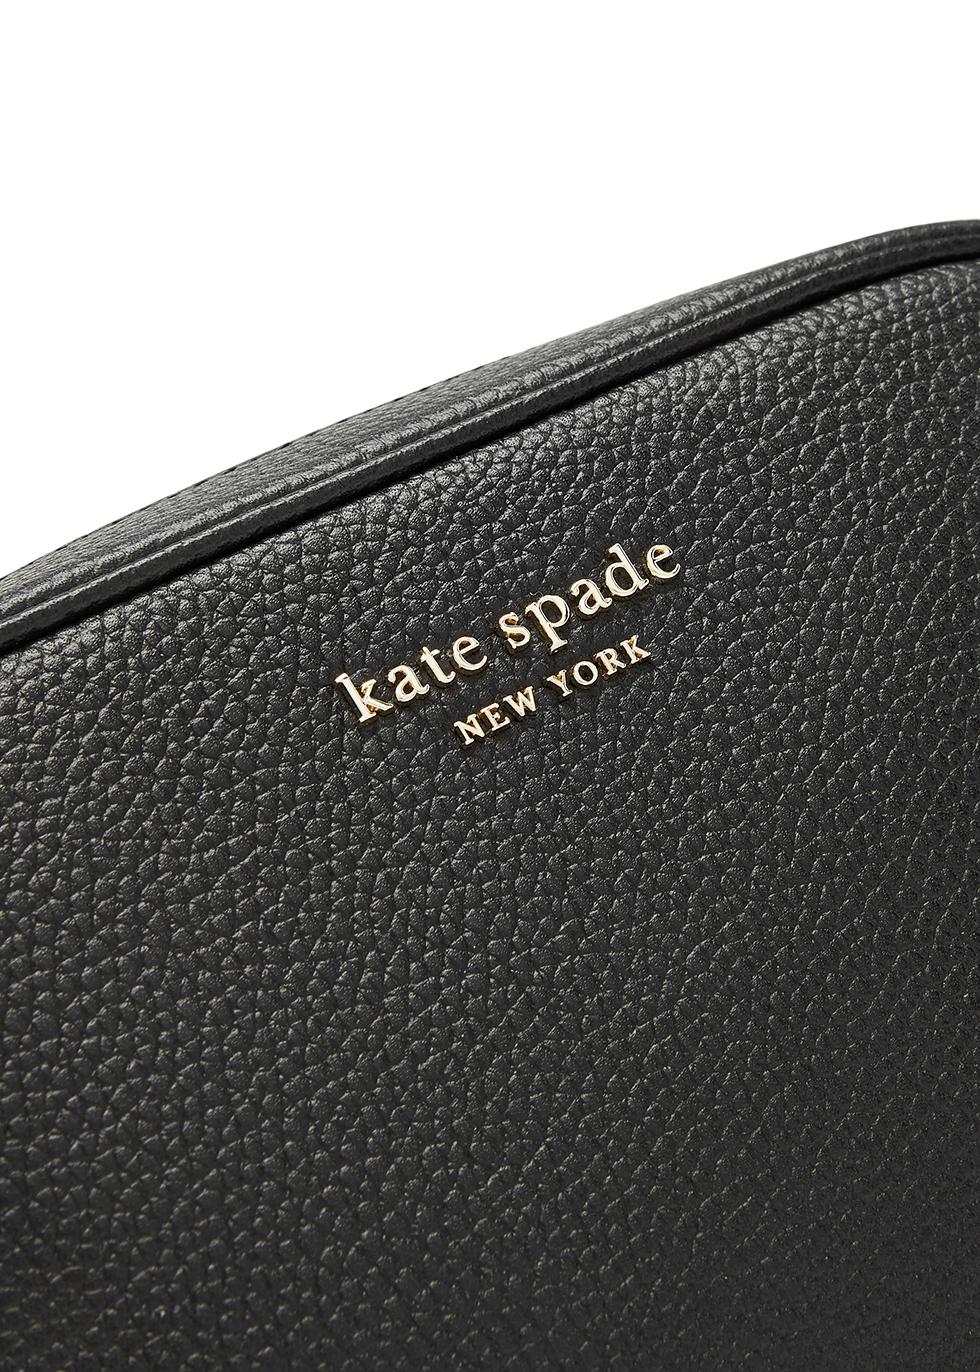 Kate Spade Mandy Dome Cross Body Bag - Black